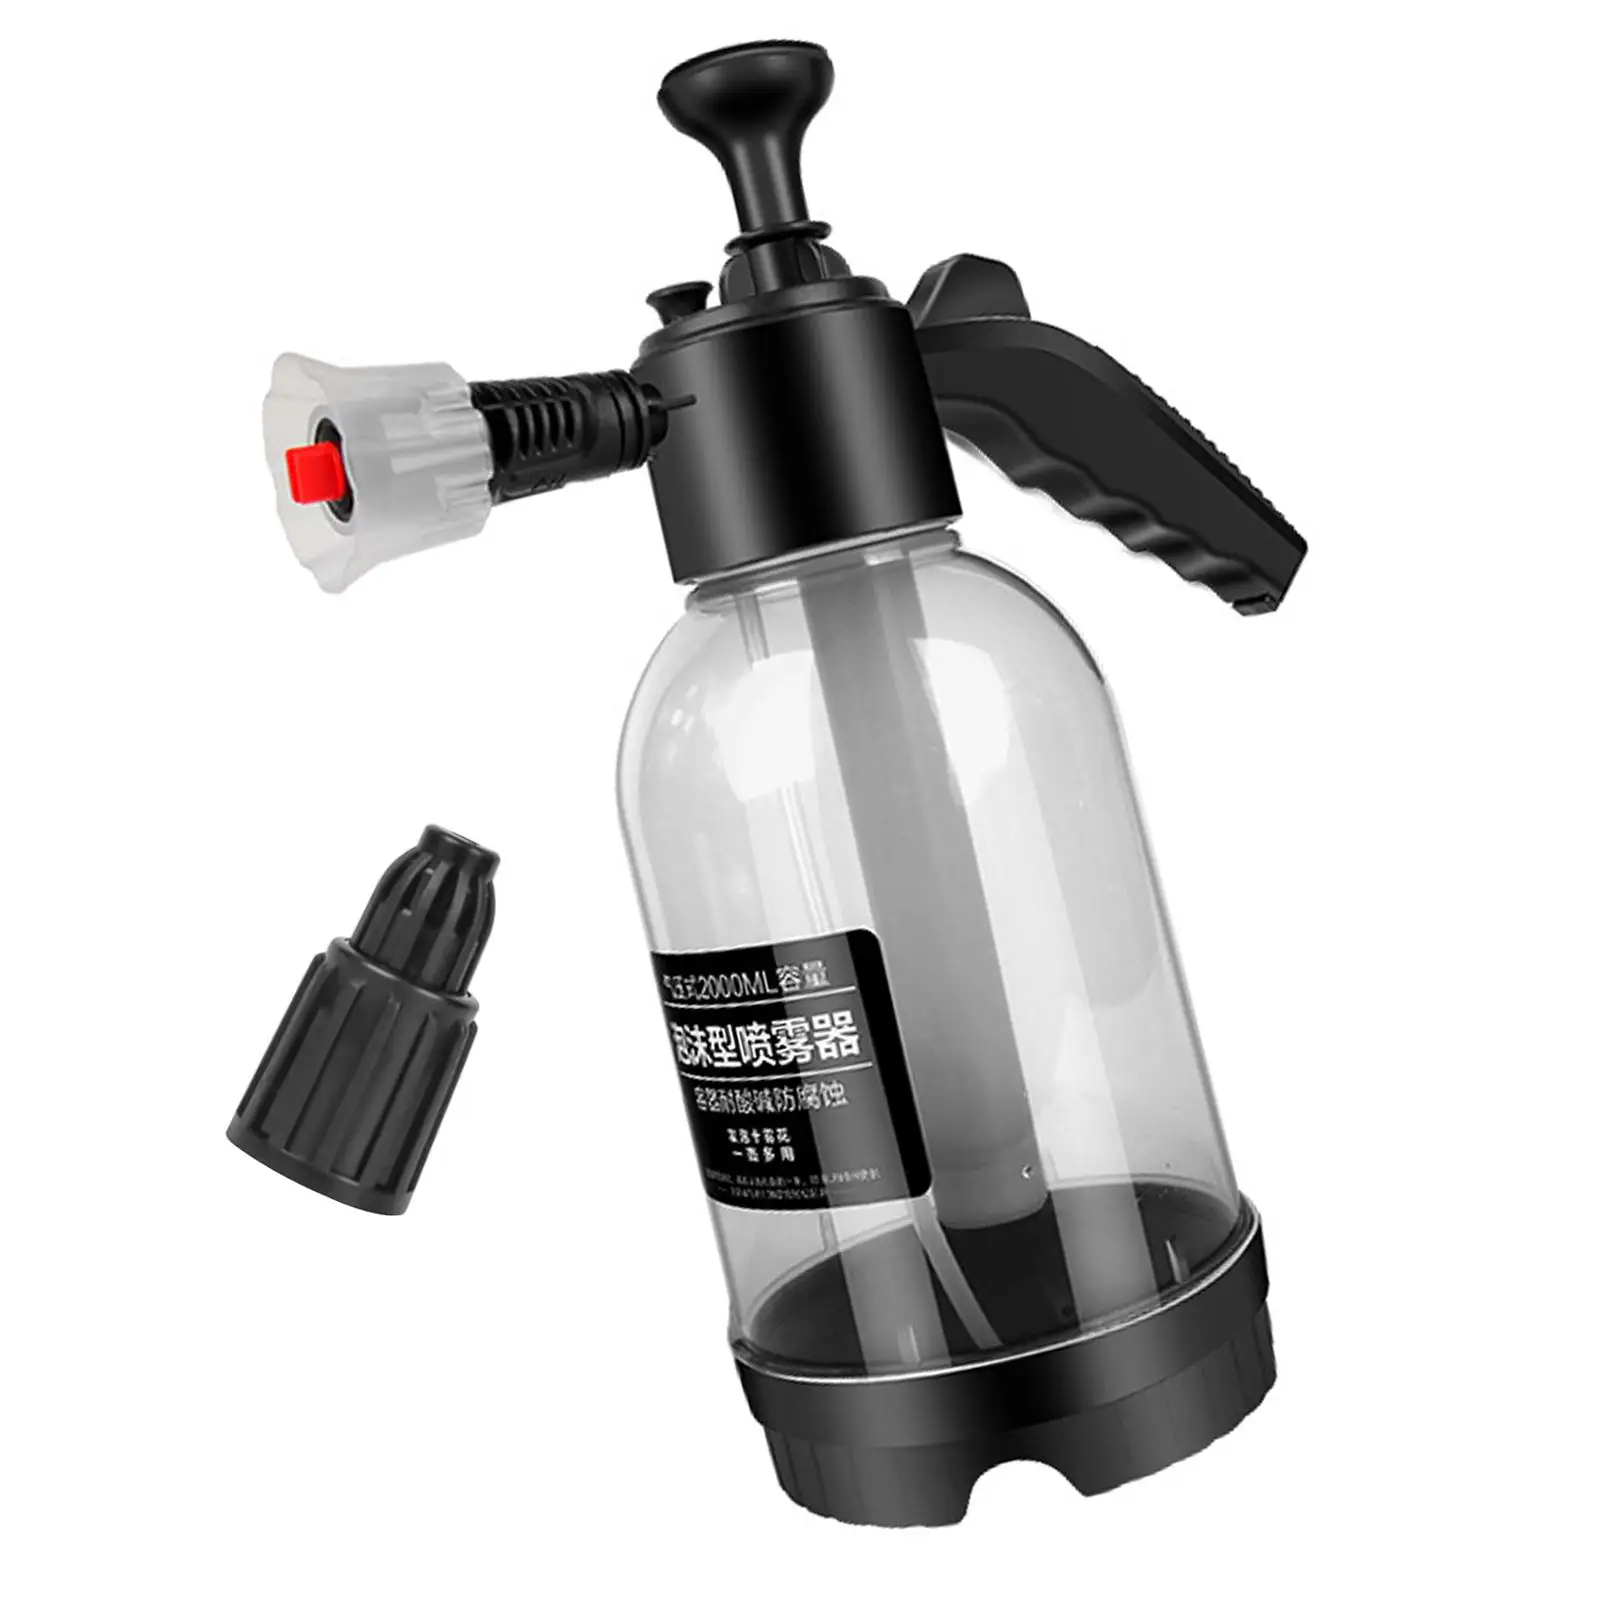 Handheld Car Wash Sprayer 2L Auto Cleaning Equipment for Garden Lawn Outdoor